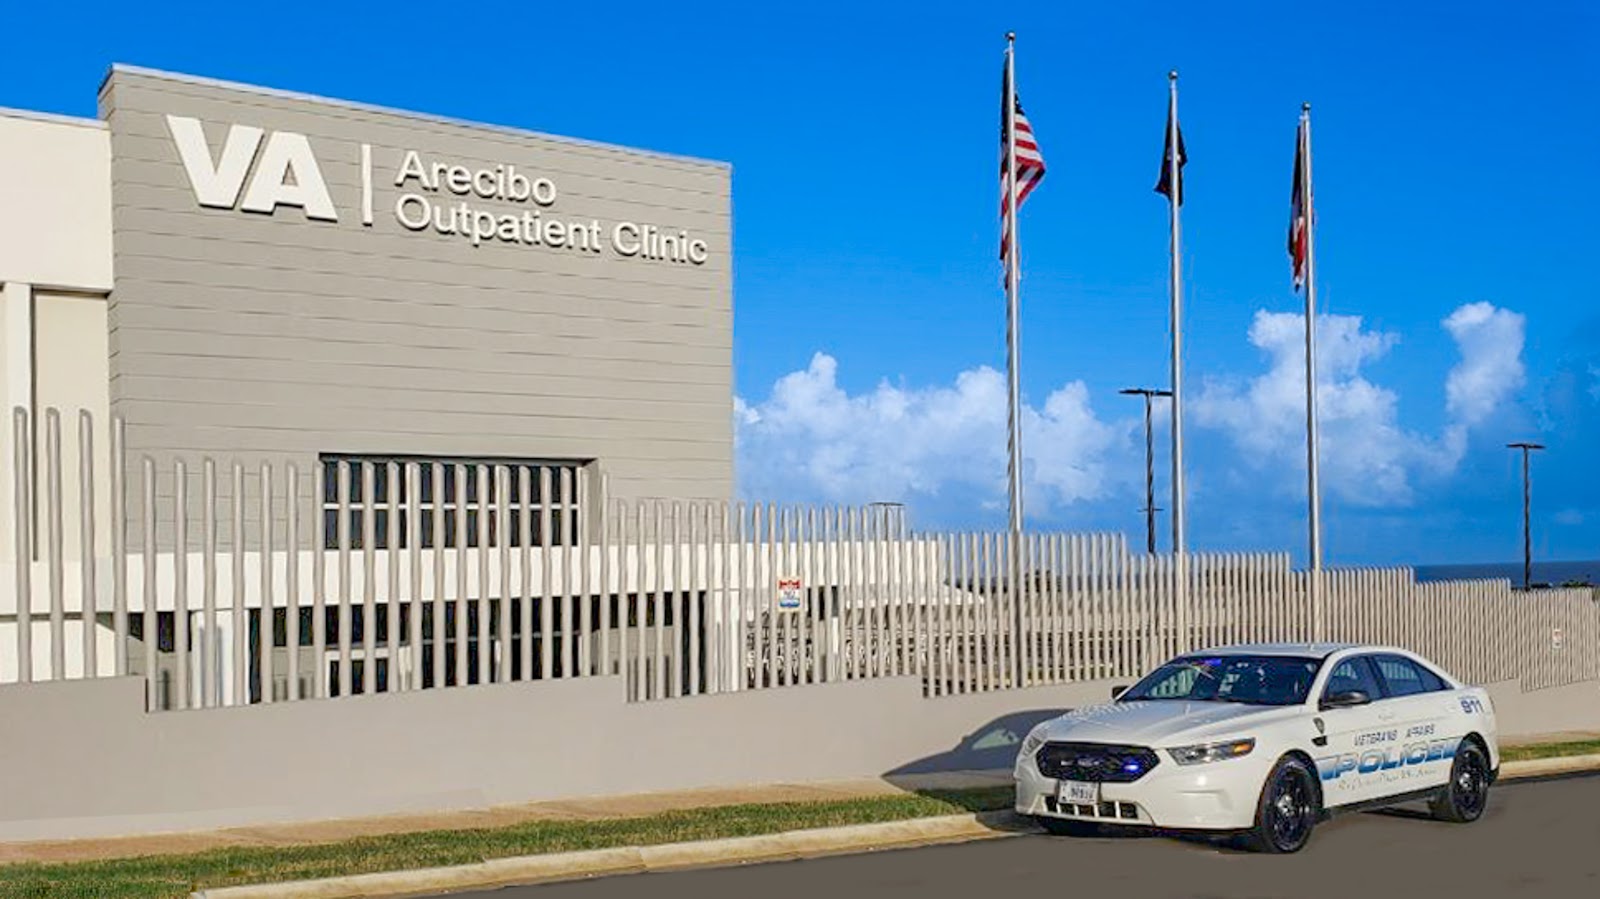 VA Caribbean Healthcare System - Arecibo CBOC